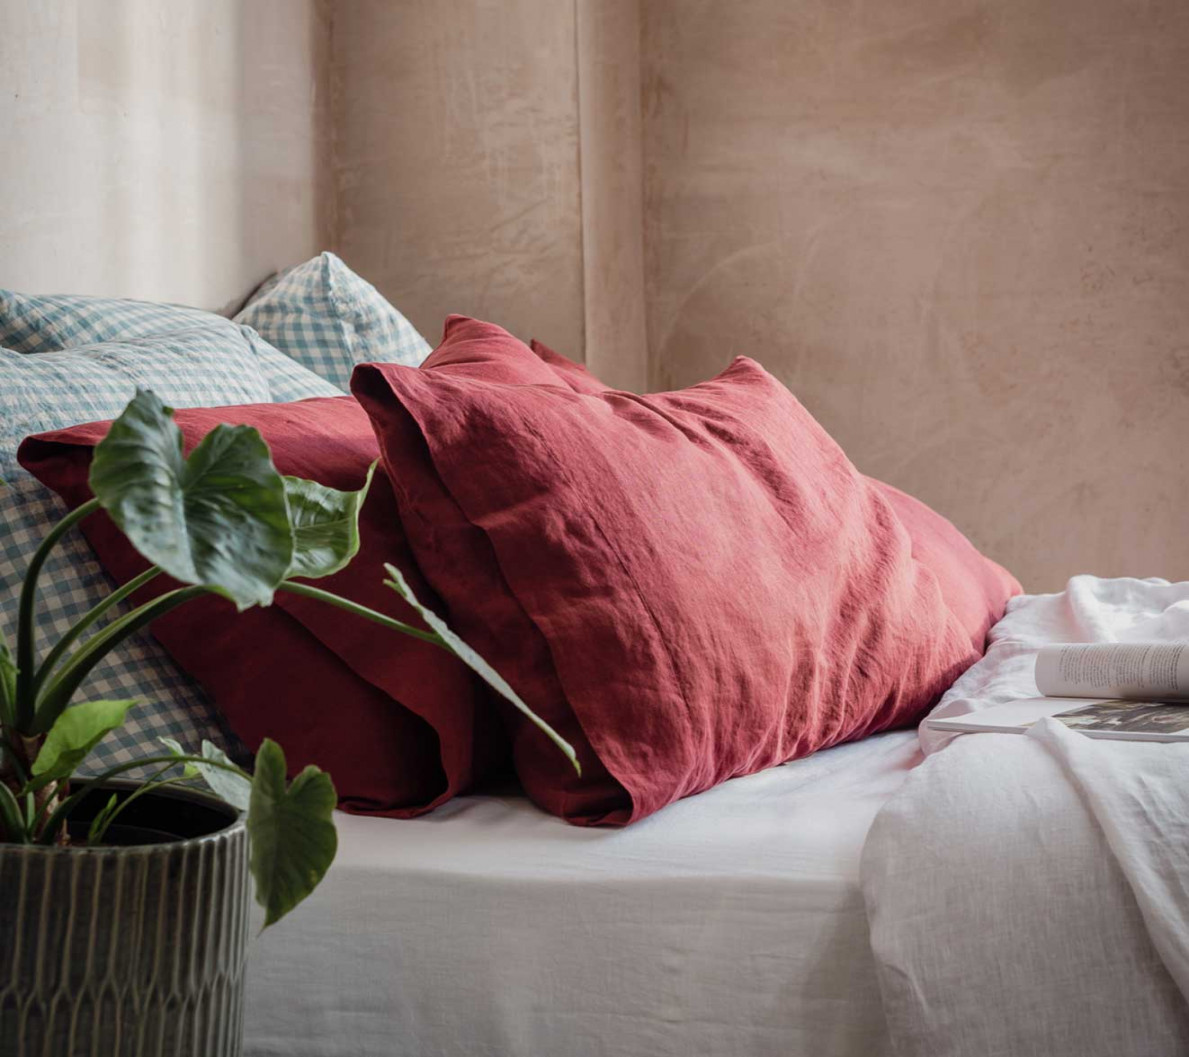 Piglet in Bed UK: Luxury Bedding, Sleepwear and Homeware